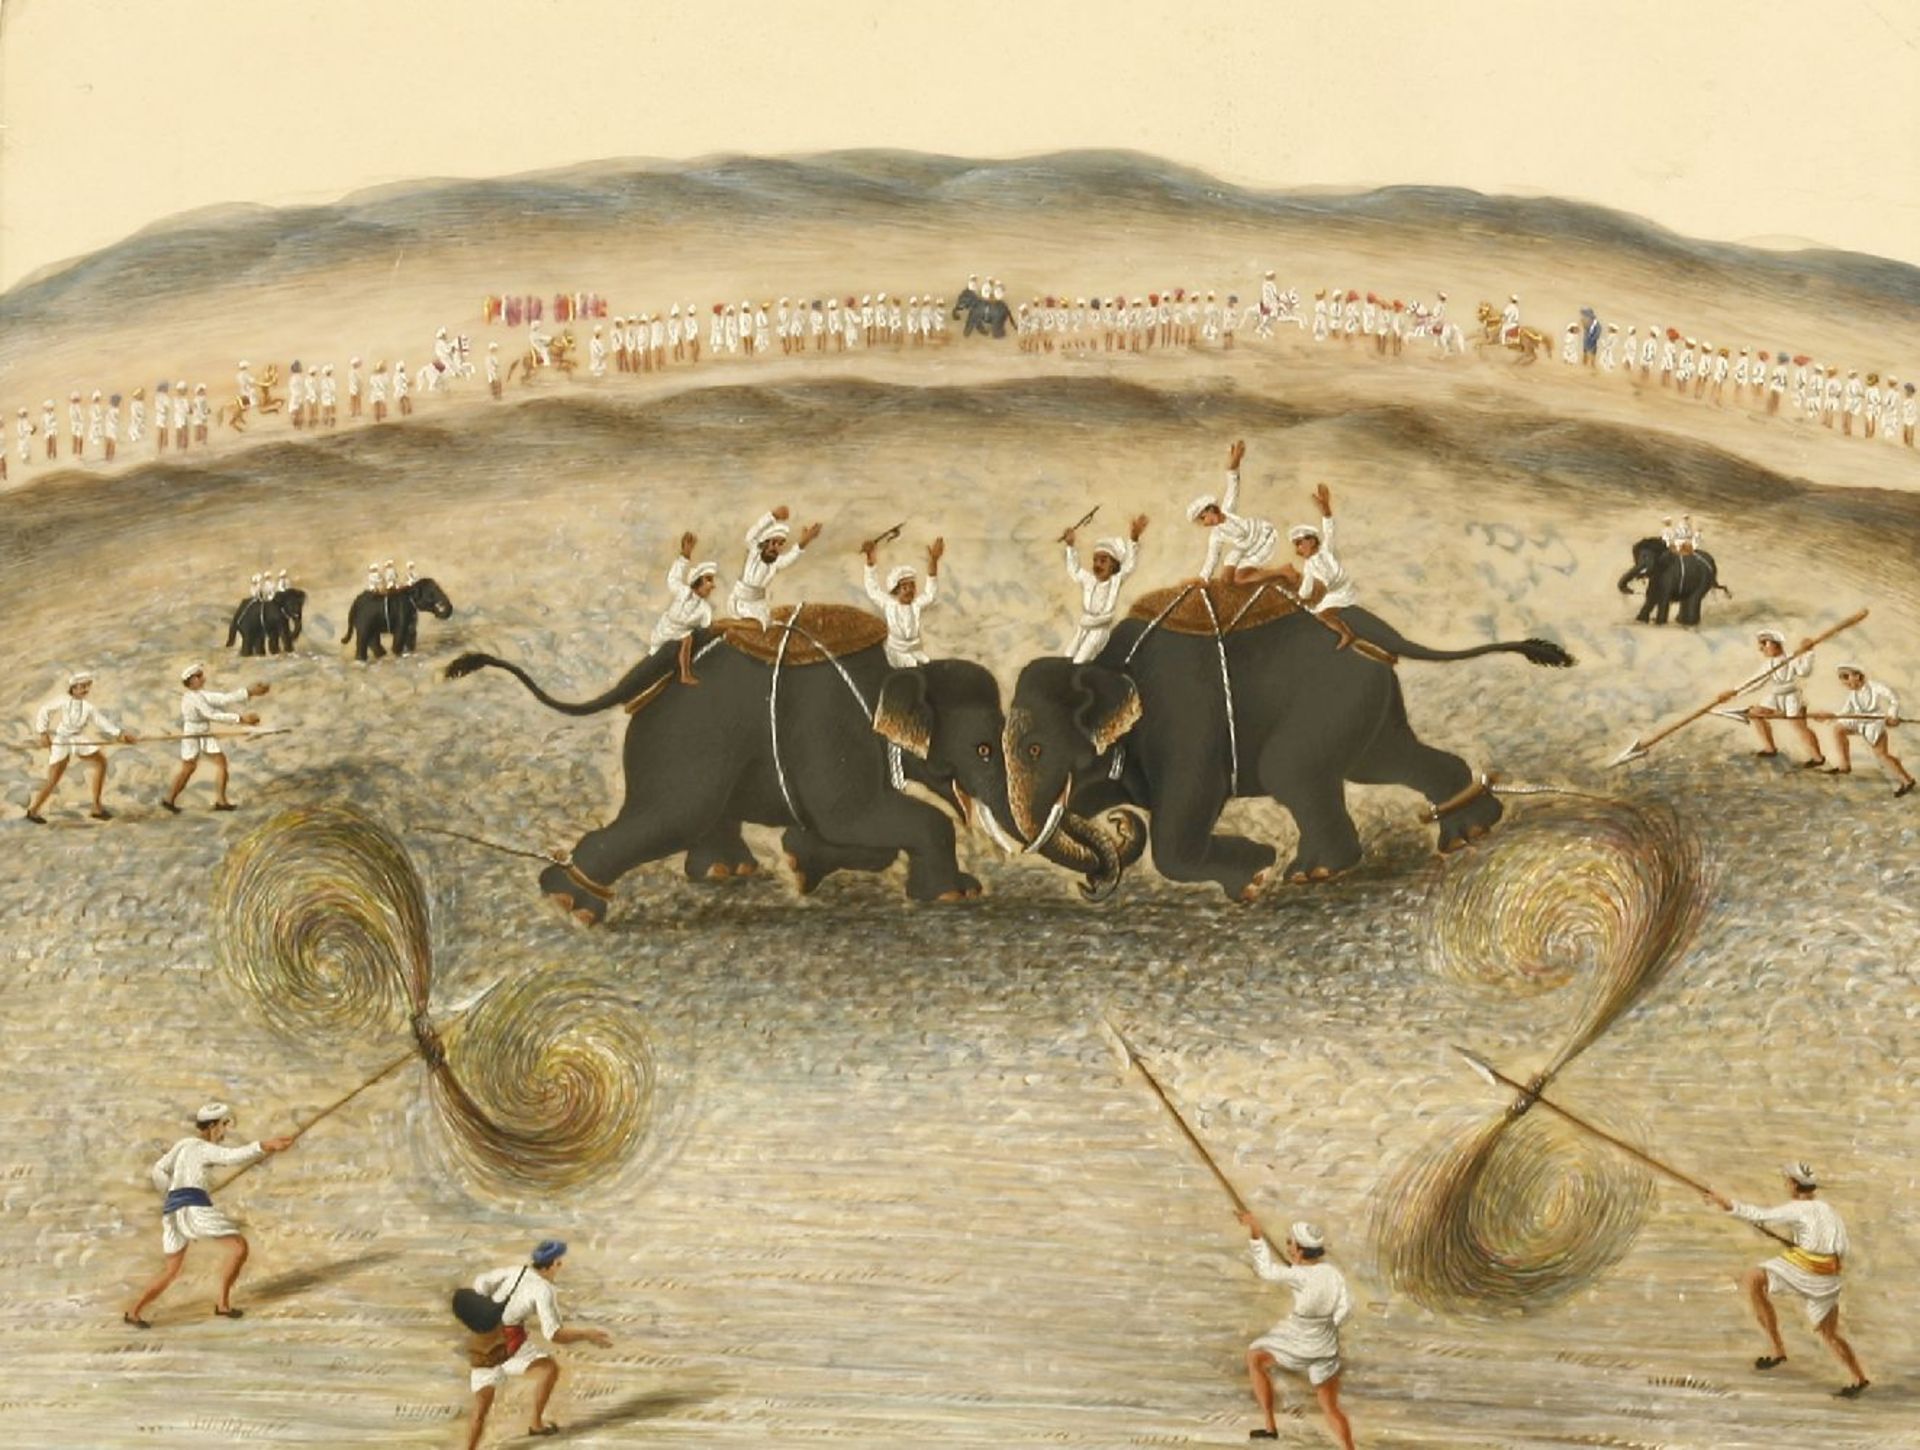 An Indian painting on mica,c.1800, probably Murshidabad, 'Fighting Elephants', two elephants